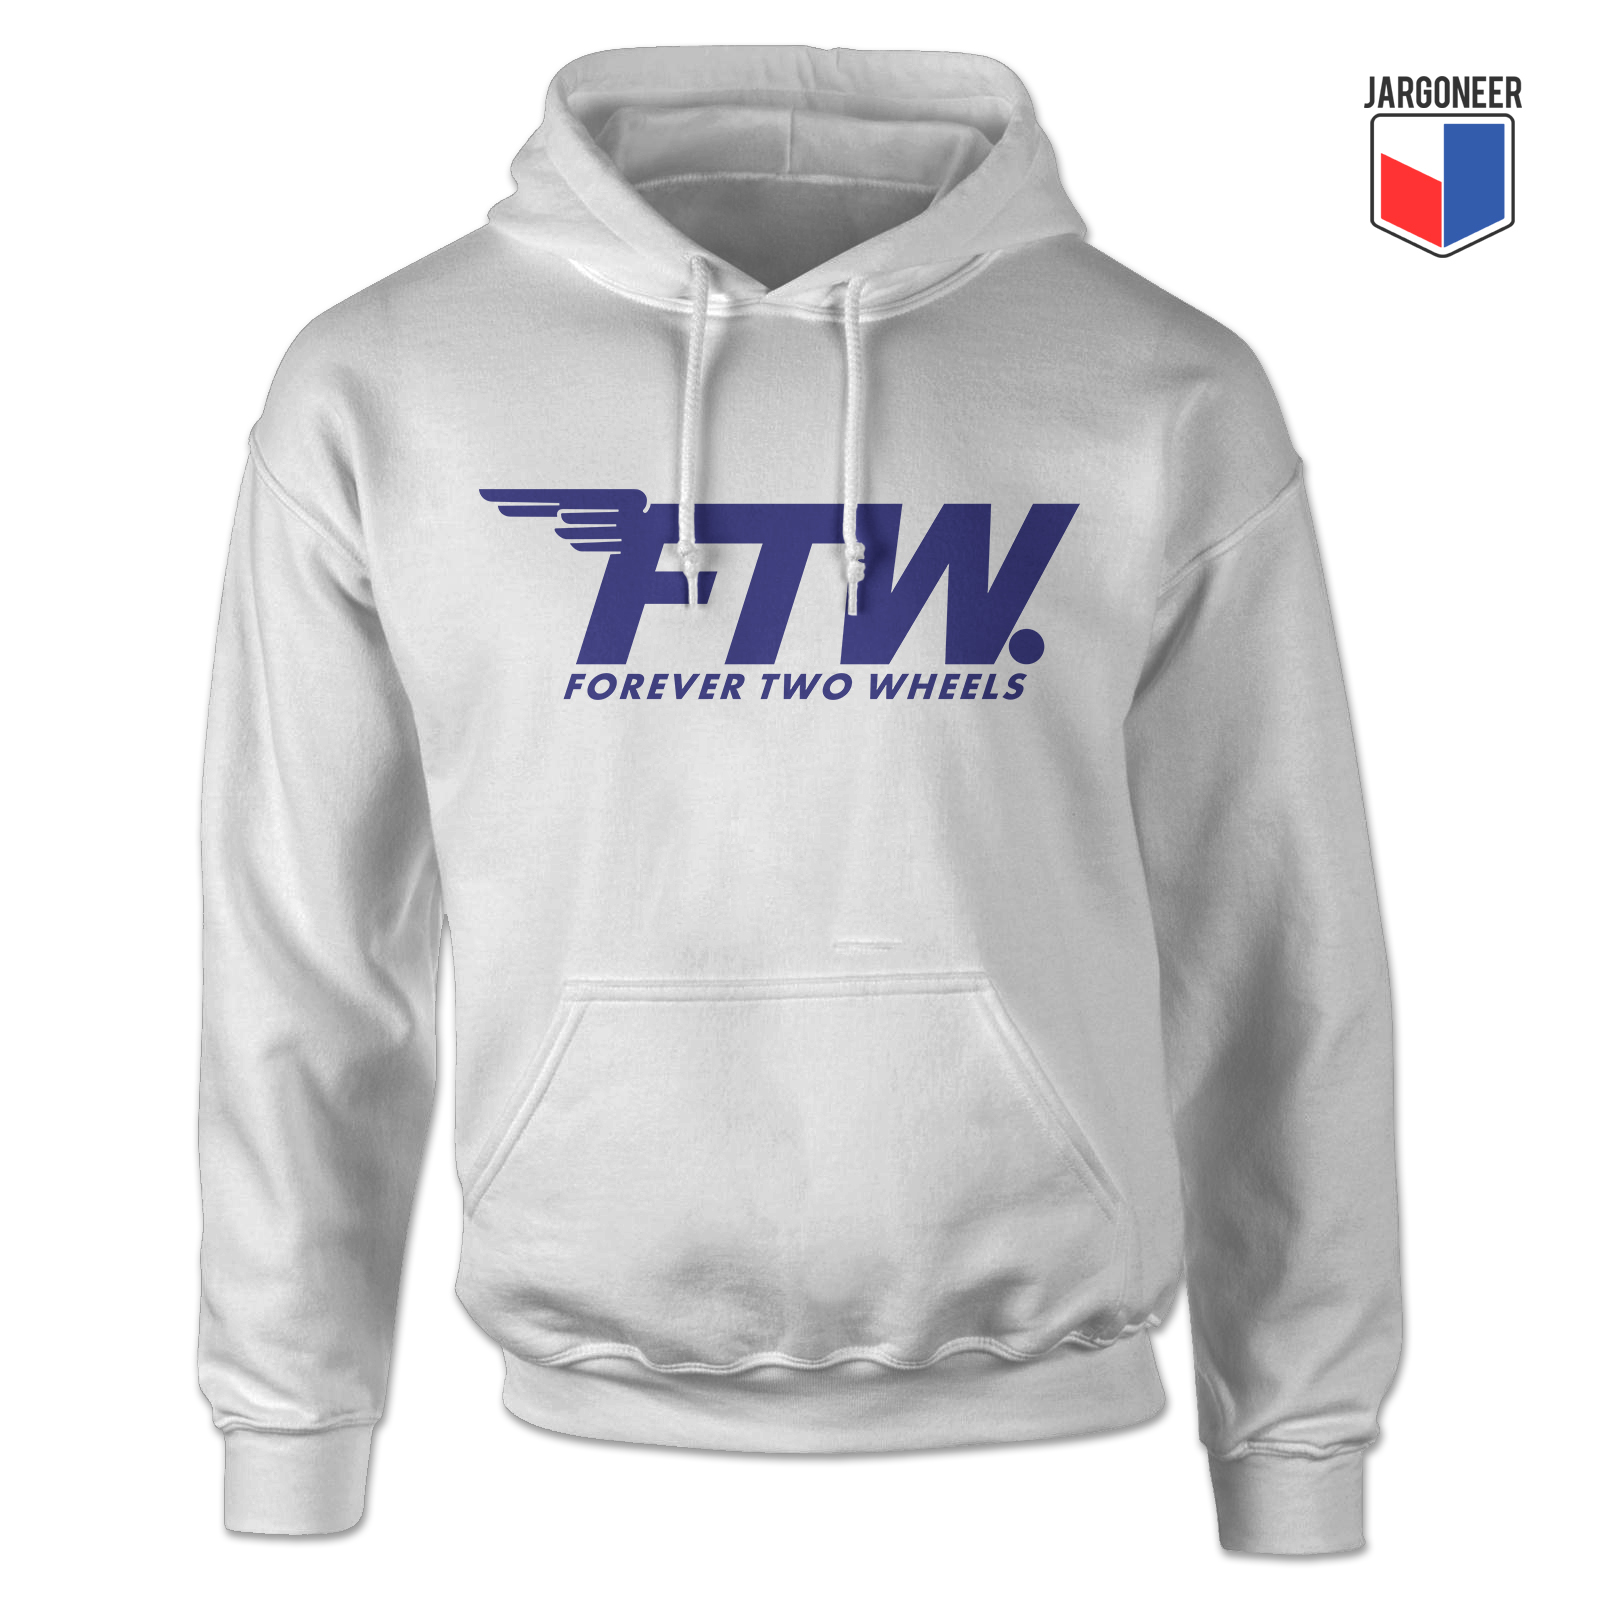 FTW White Hoody - Shop Unique Graphic Cool Shirt Designs